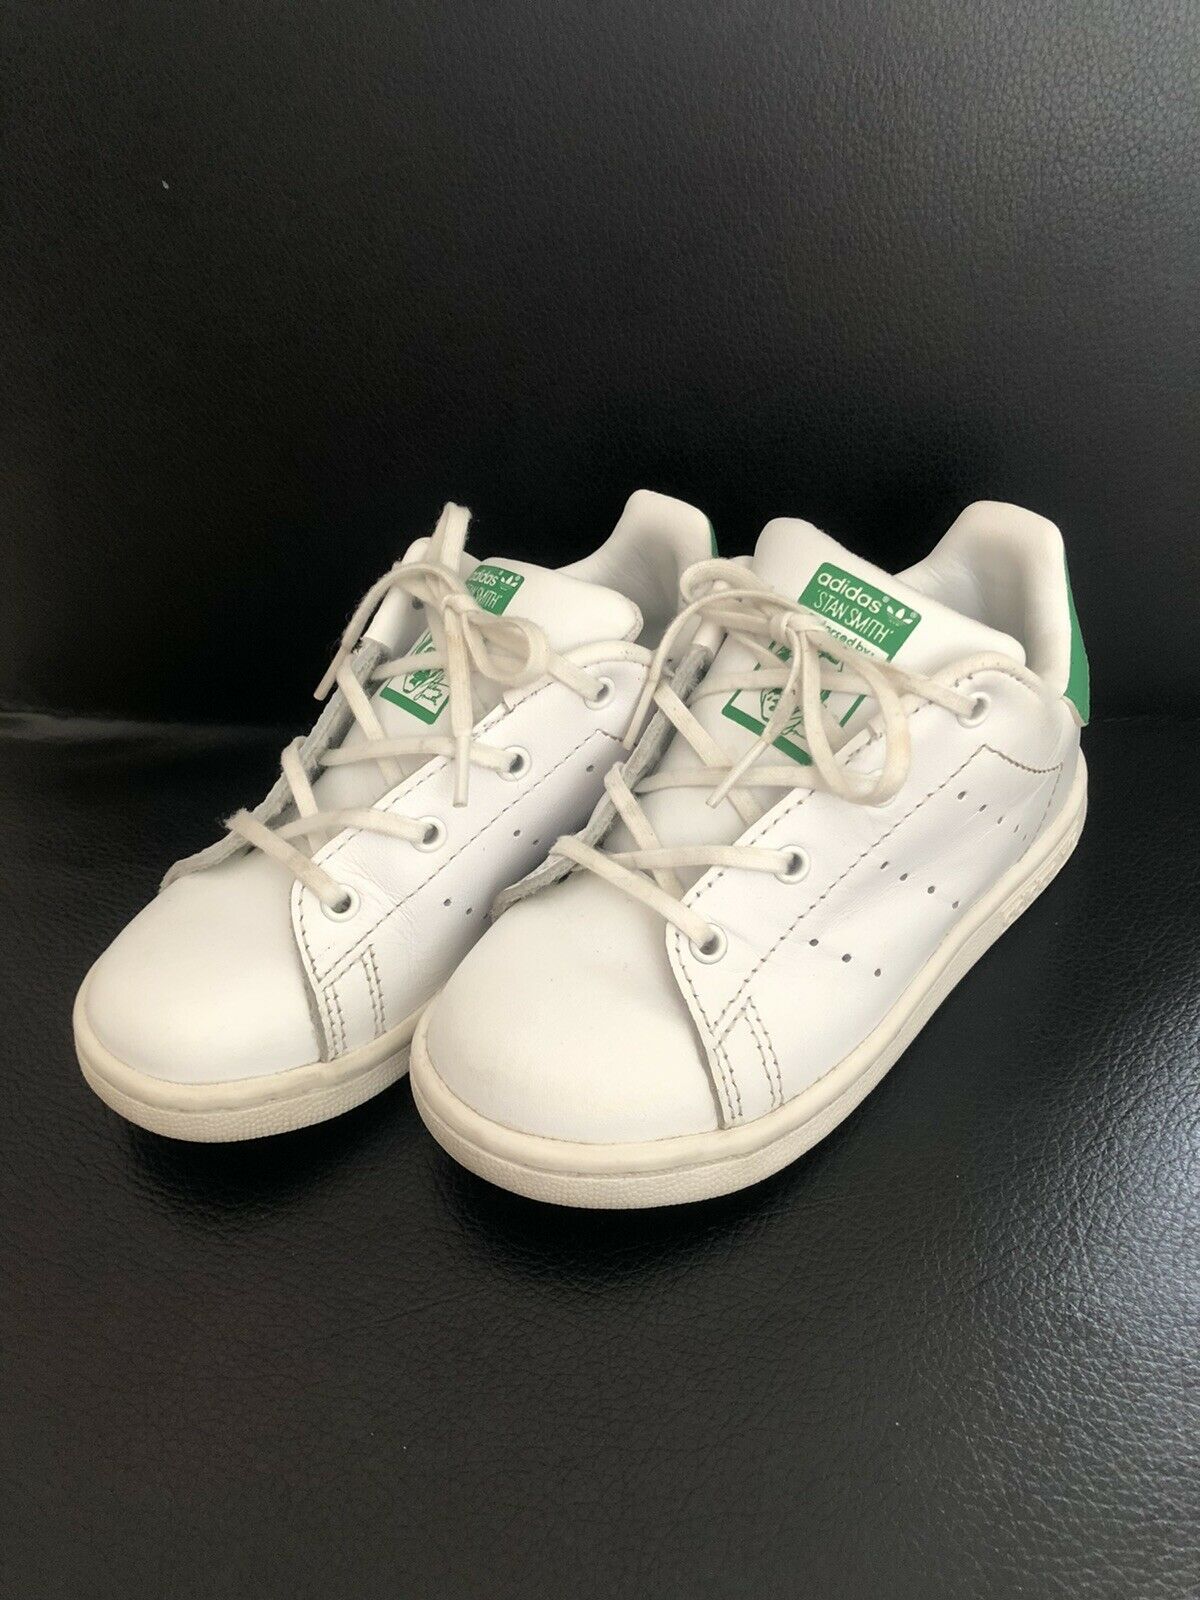 Adidas Originals Stan Smith Shoes, Toddler Size 8K